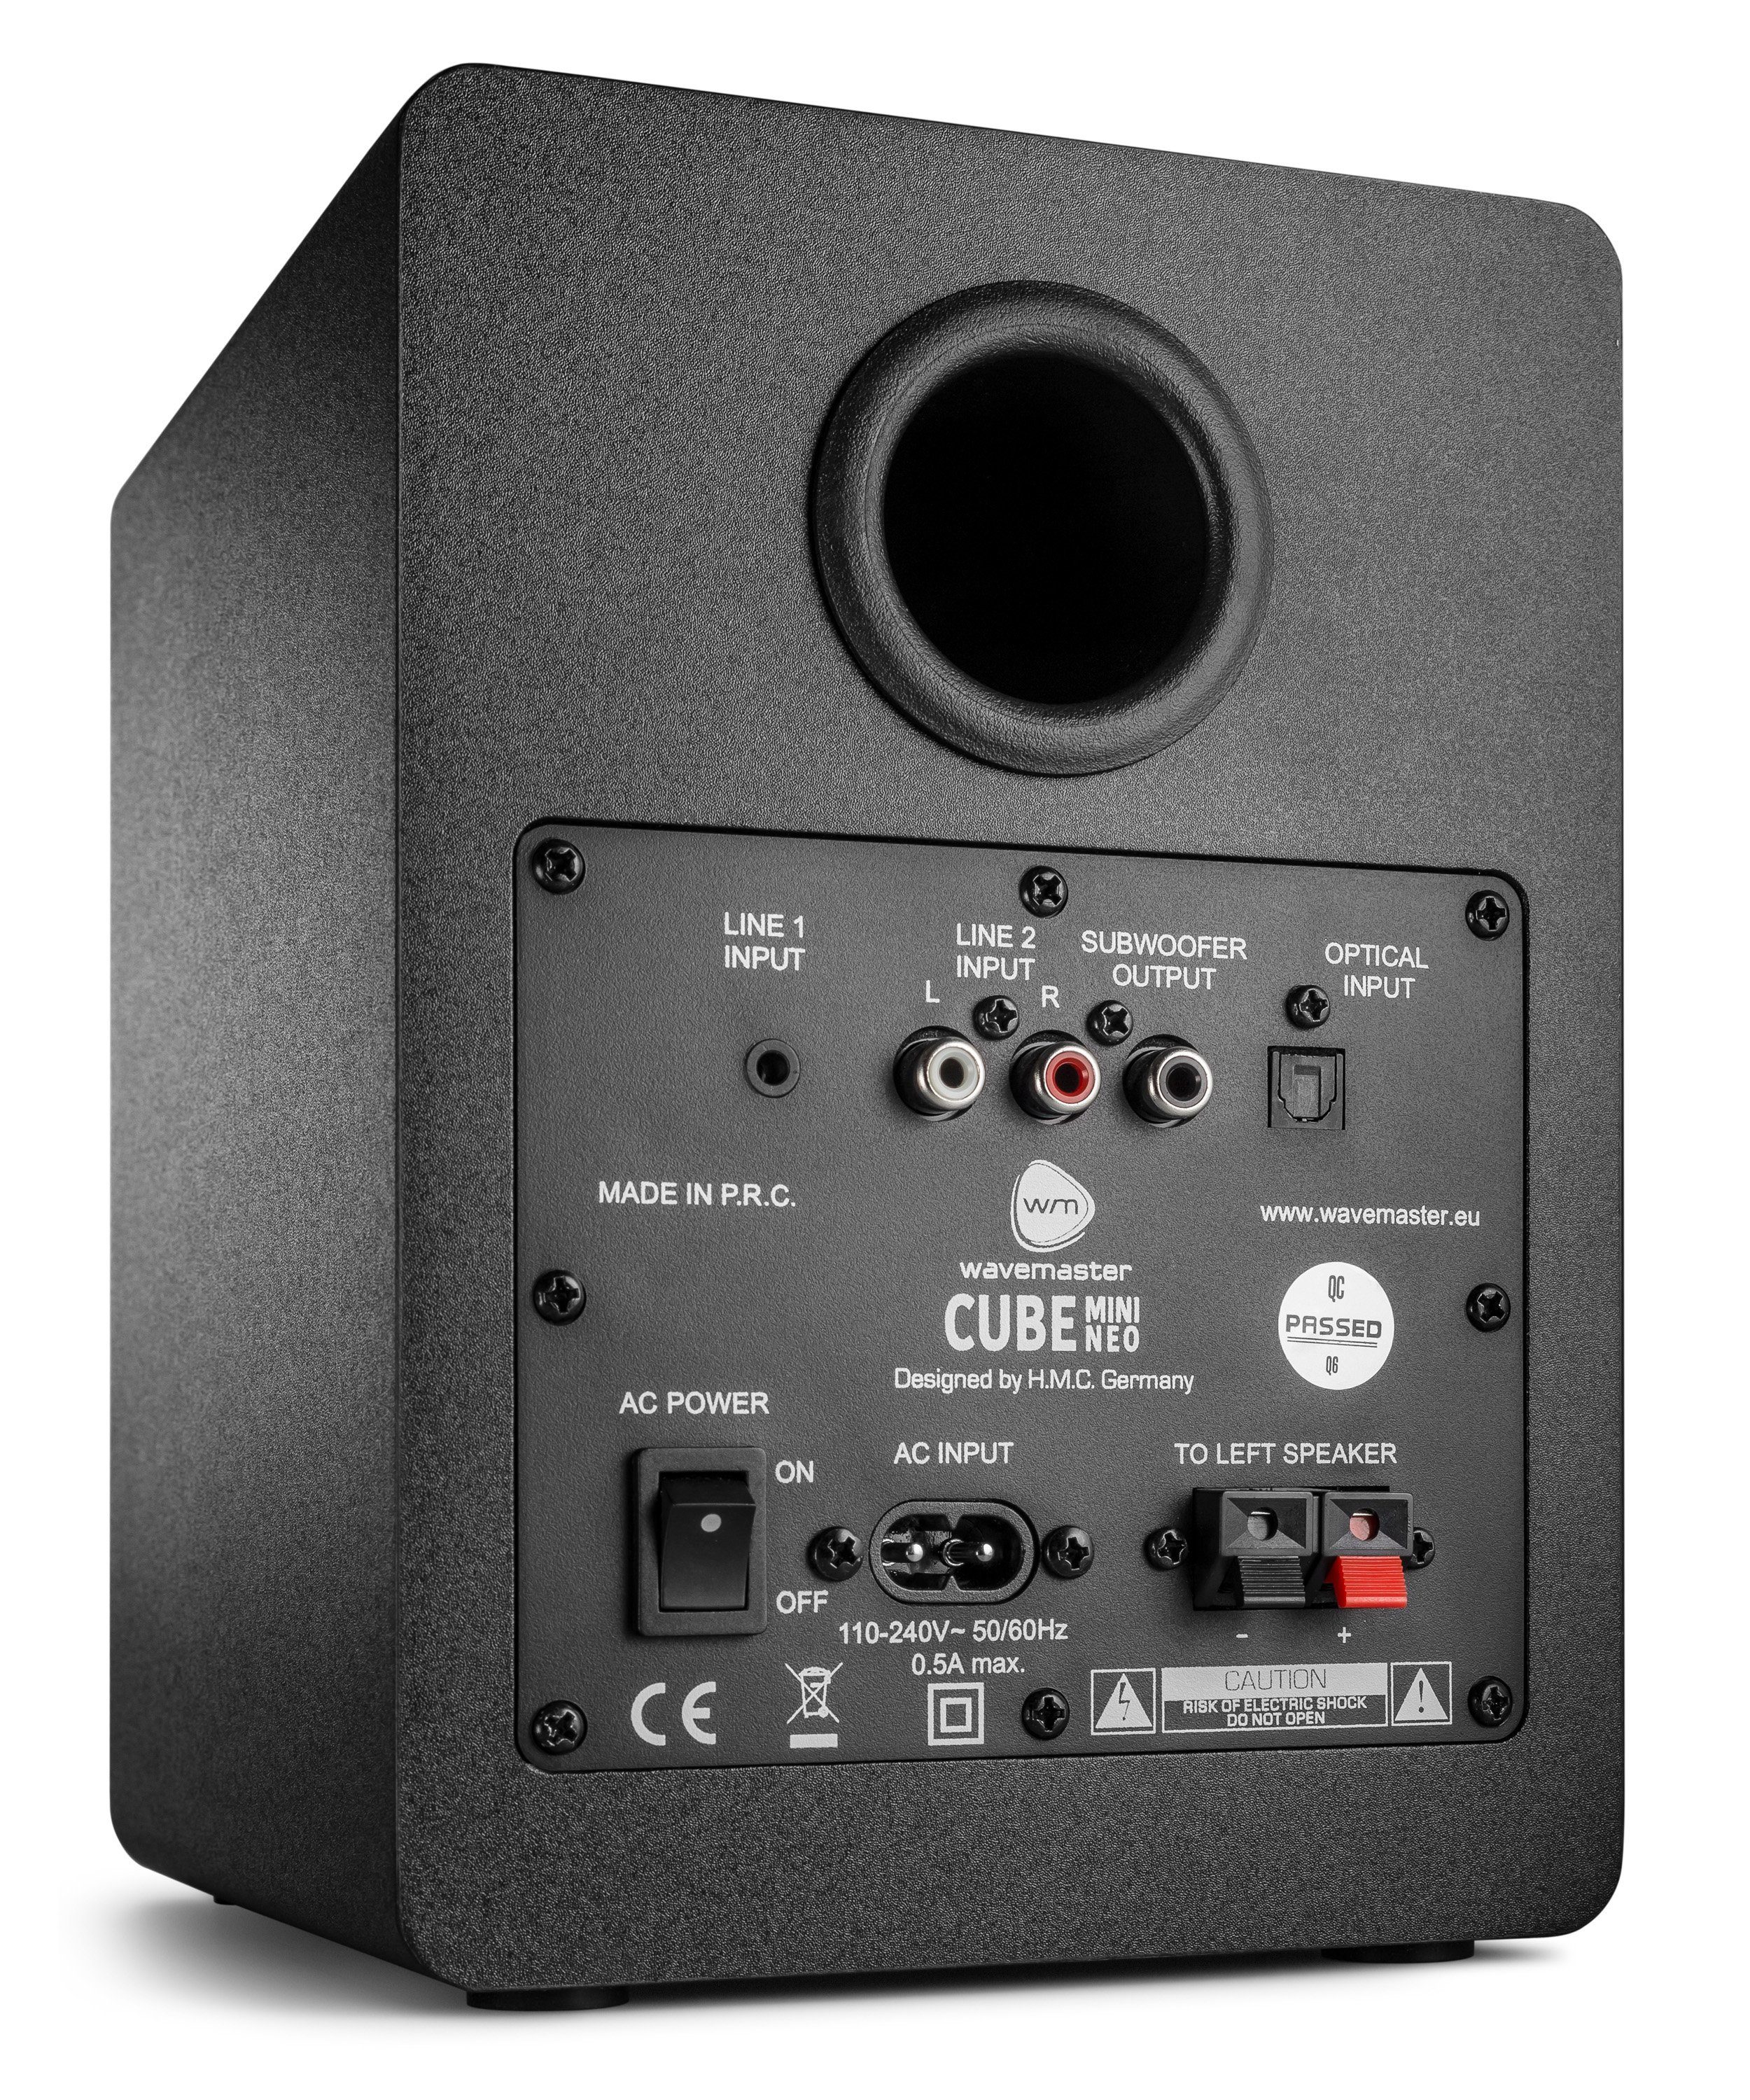 Regal-Lautsprecher Wavemaster Switch, MINI 2.0 W, Auto Subwoofer-Ausgang) Black CUBE 36 (Bluetooth, IR-Fernbedienung,